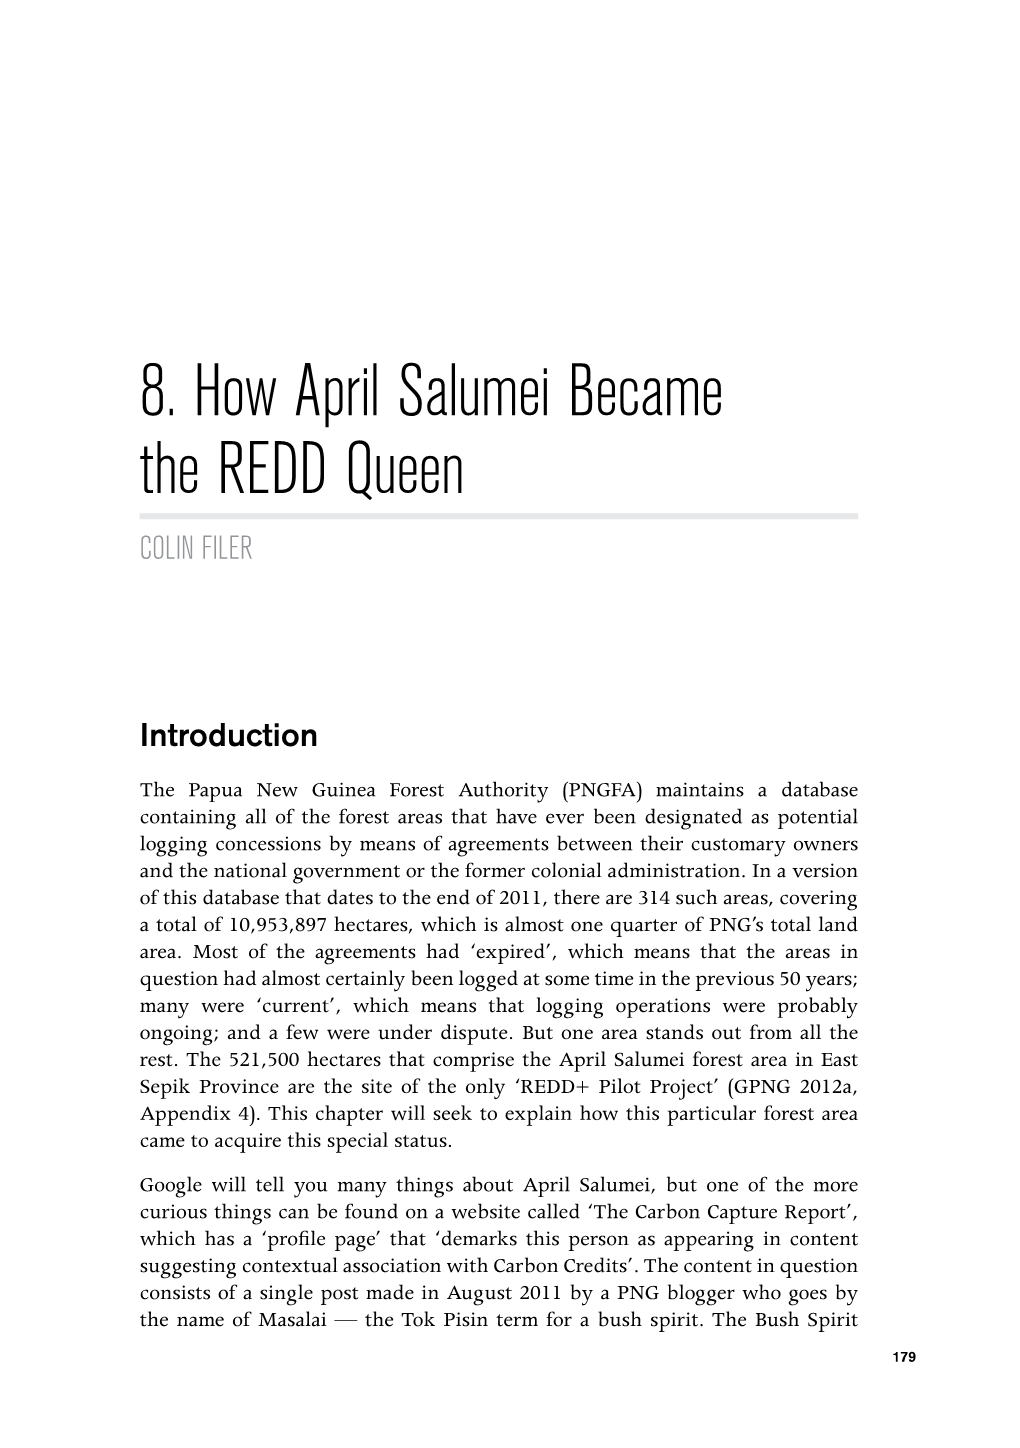 8. How April Salumei Became the REDD Queen COLIN FILER